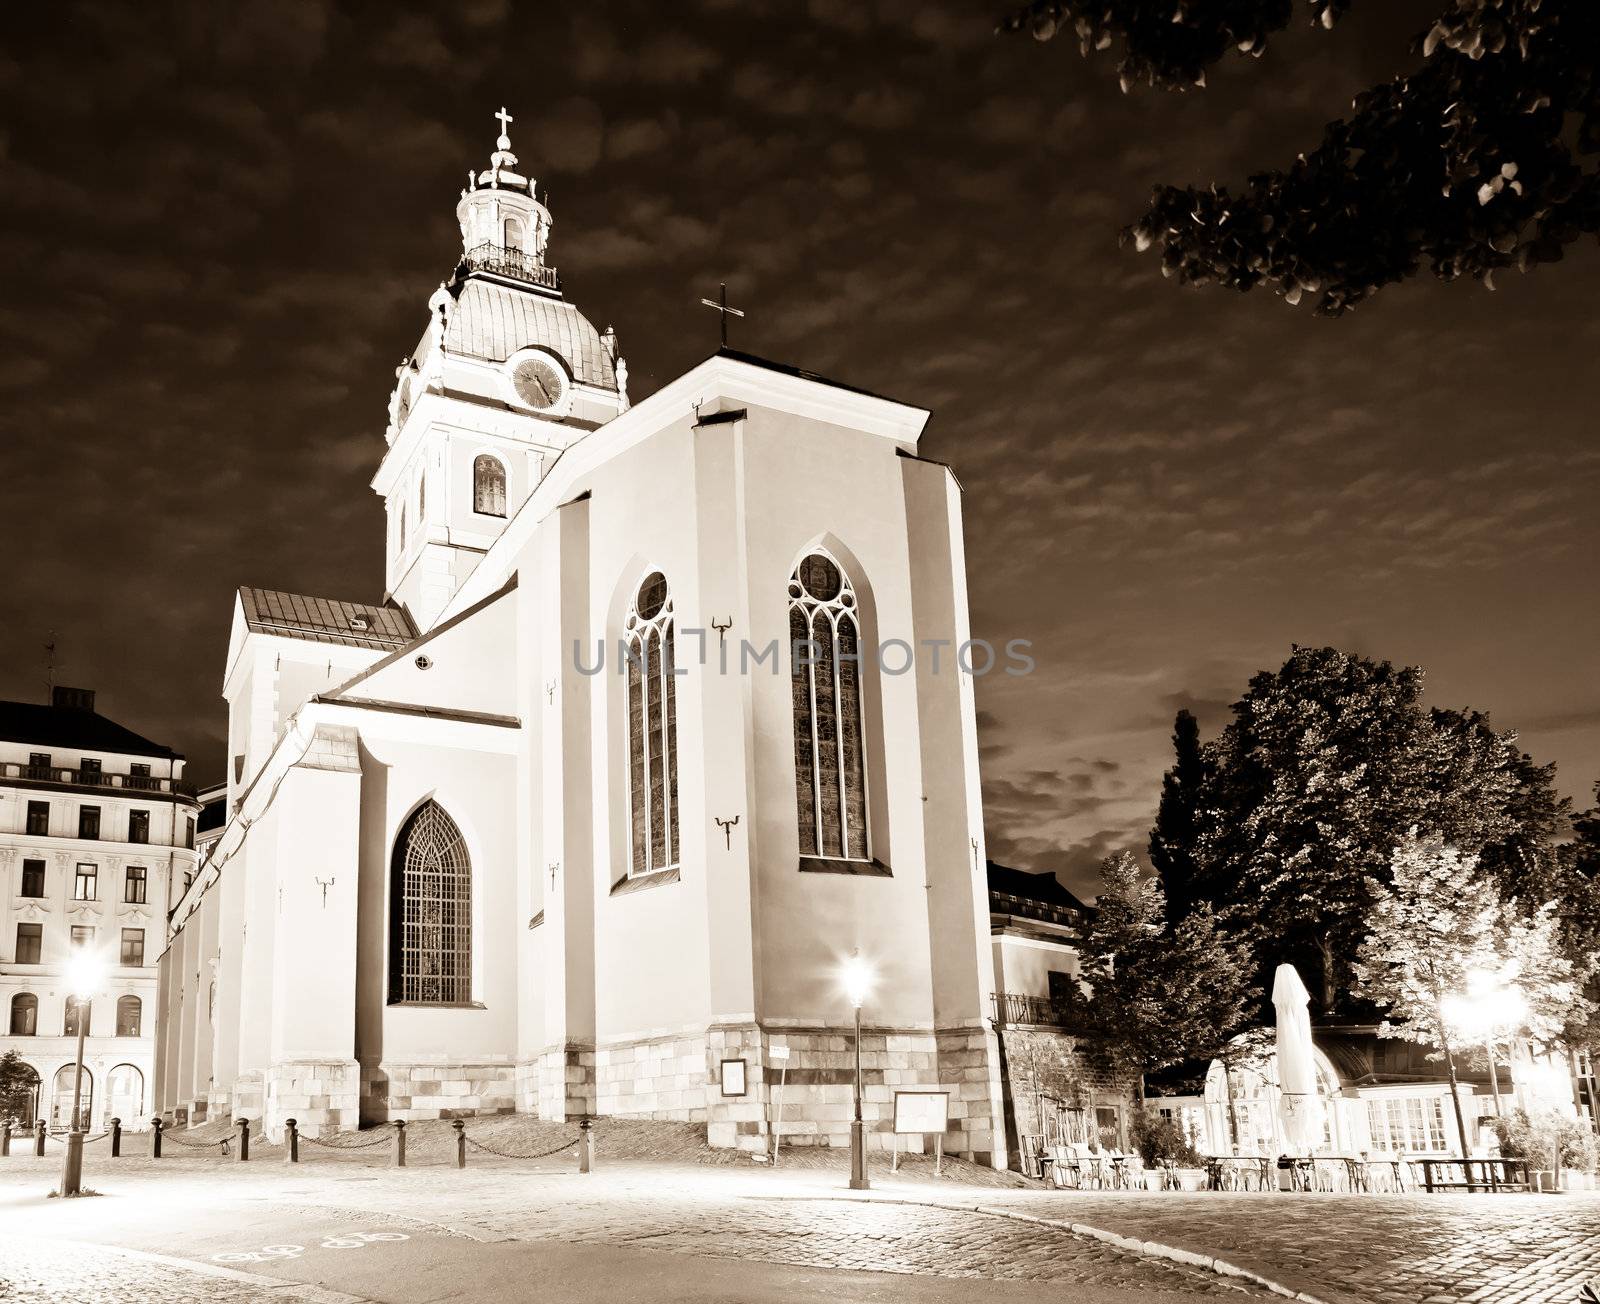 Sankt Jakobs kyrka church in stockholm by gary718